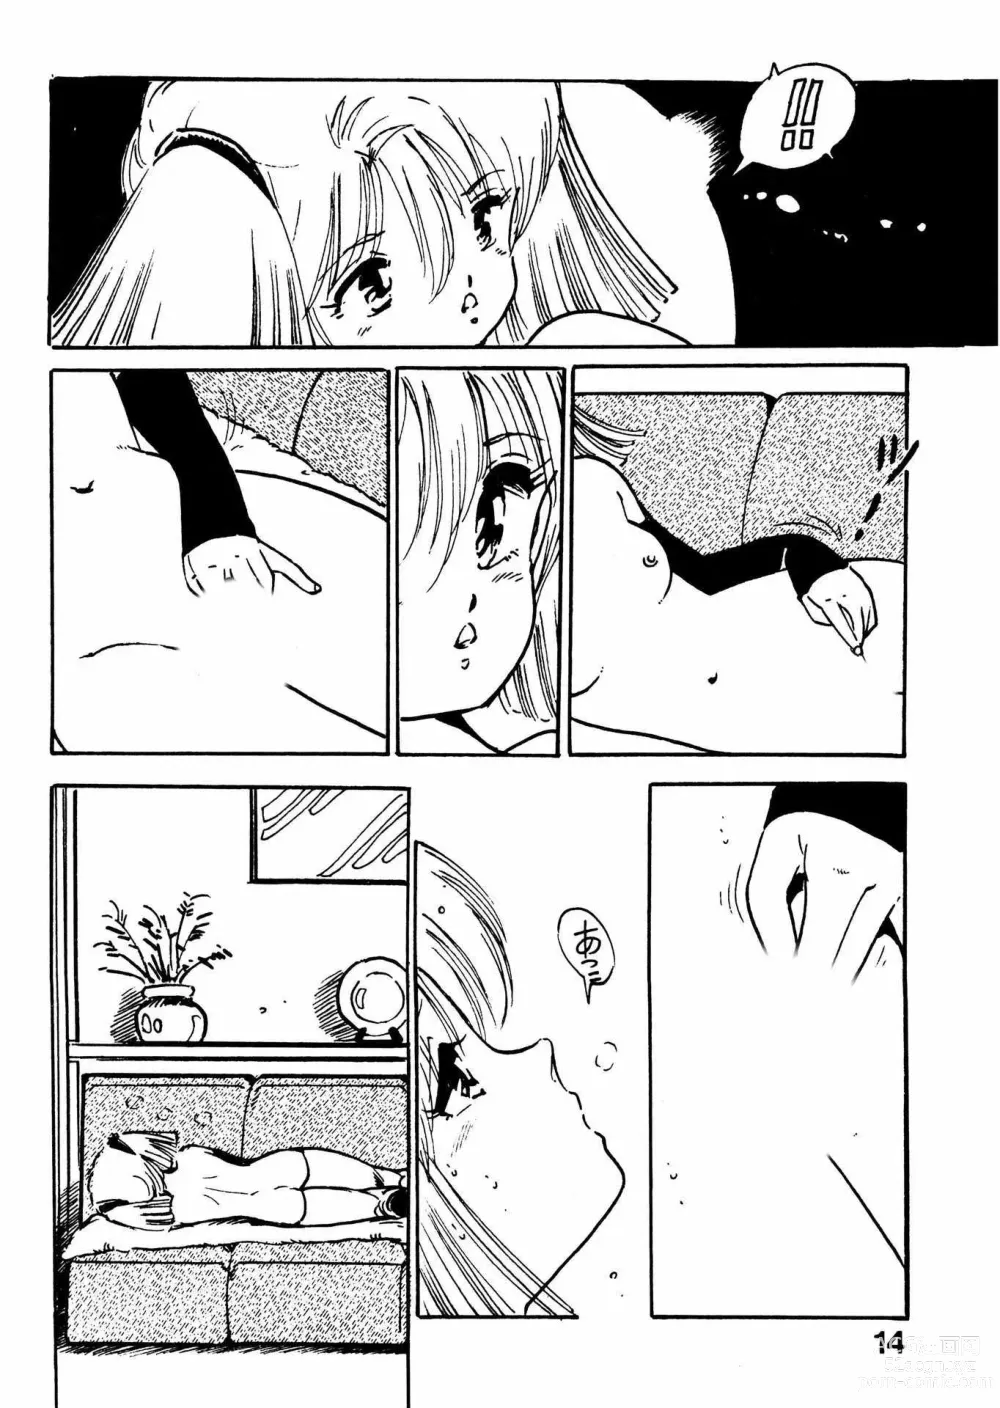 Page 14 of manga Bijo Hime Jigoku